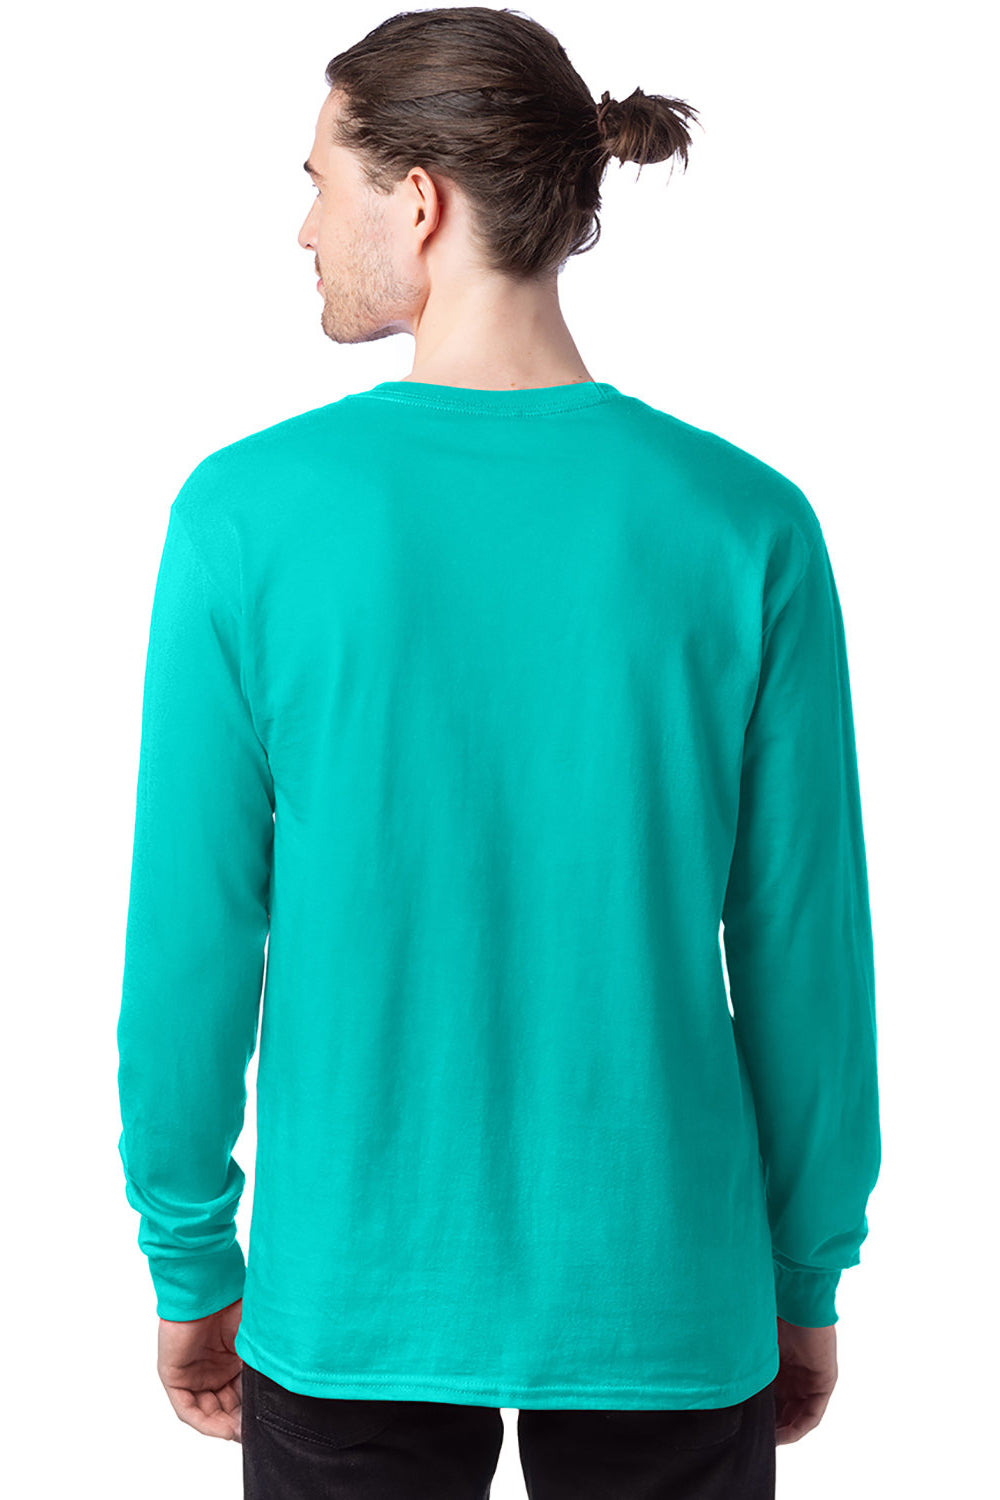 Hanes 5286 Mens ComfortSoft Long Sleeve Crewneck T-Shirt Athletic Teal Green Back